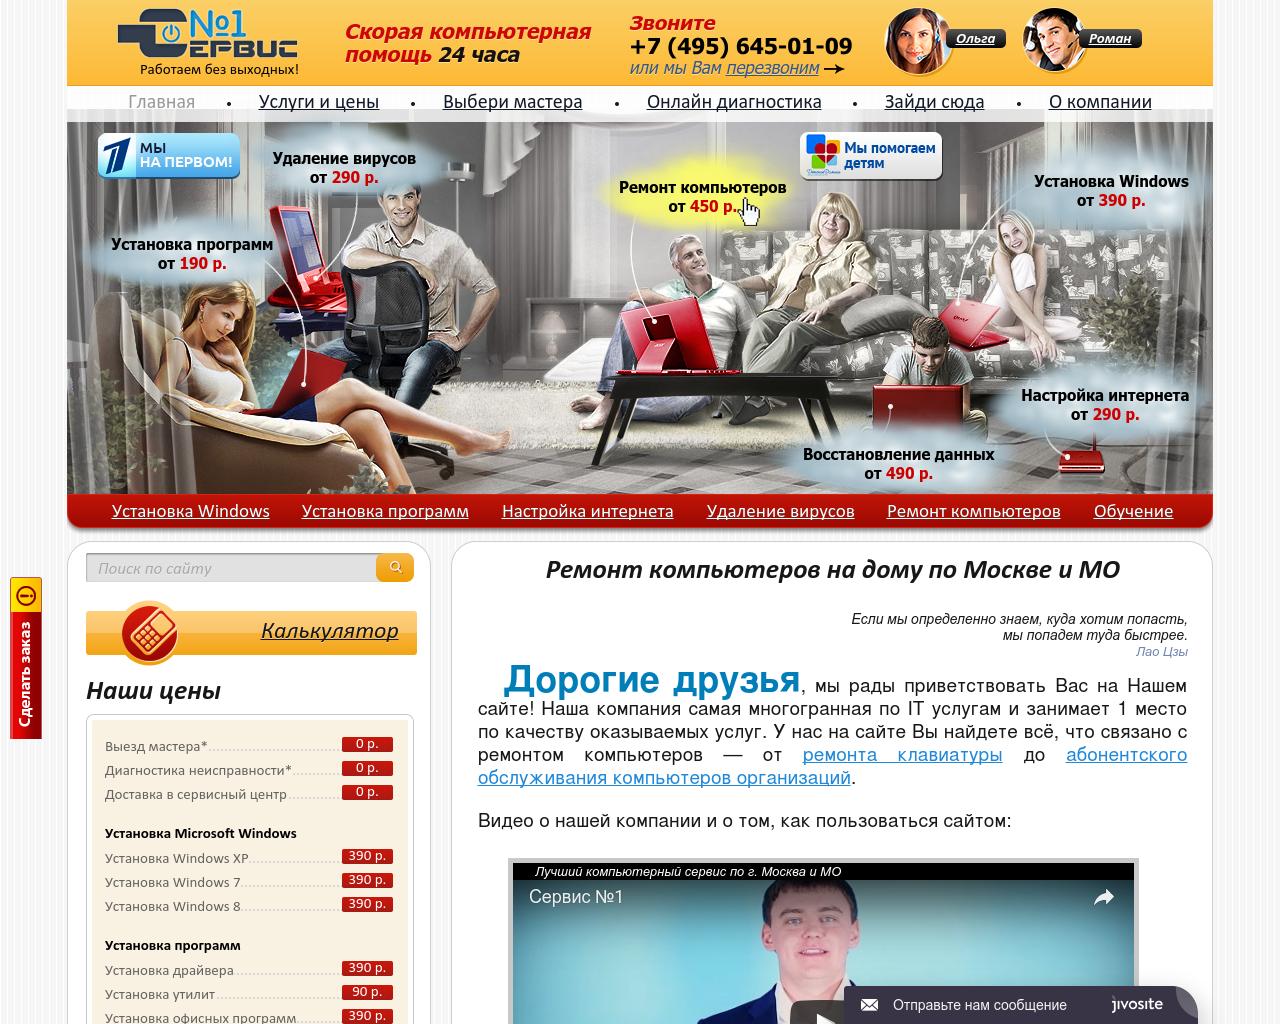 Изображение сайта help-computer-club.ru в разрешении 1280x1024